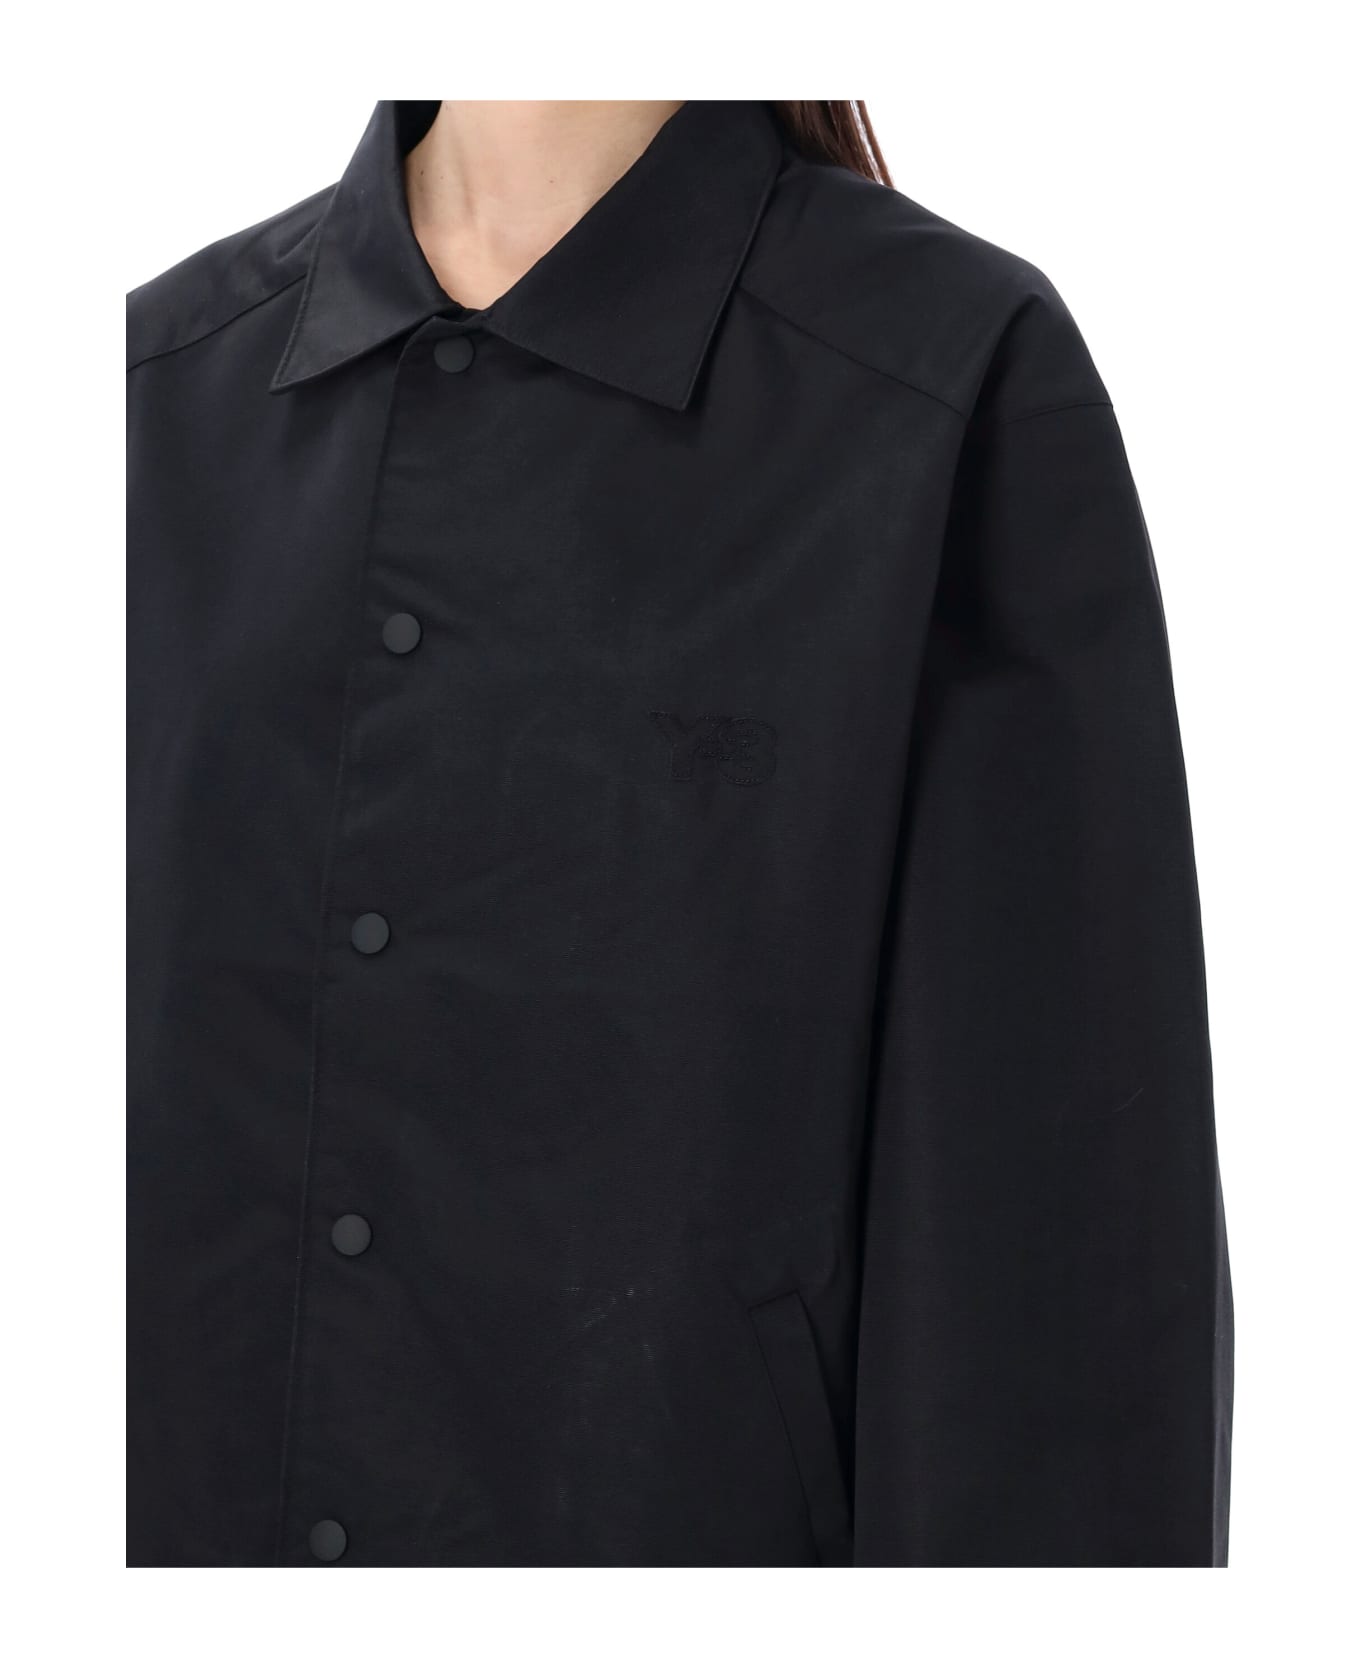 Y-3 Graphic Print Shirt Jaket - BLACK